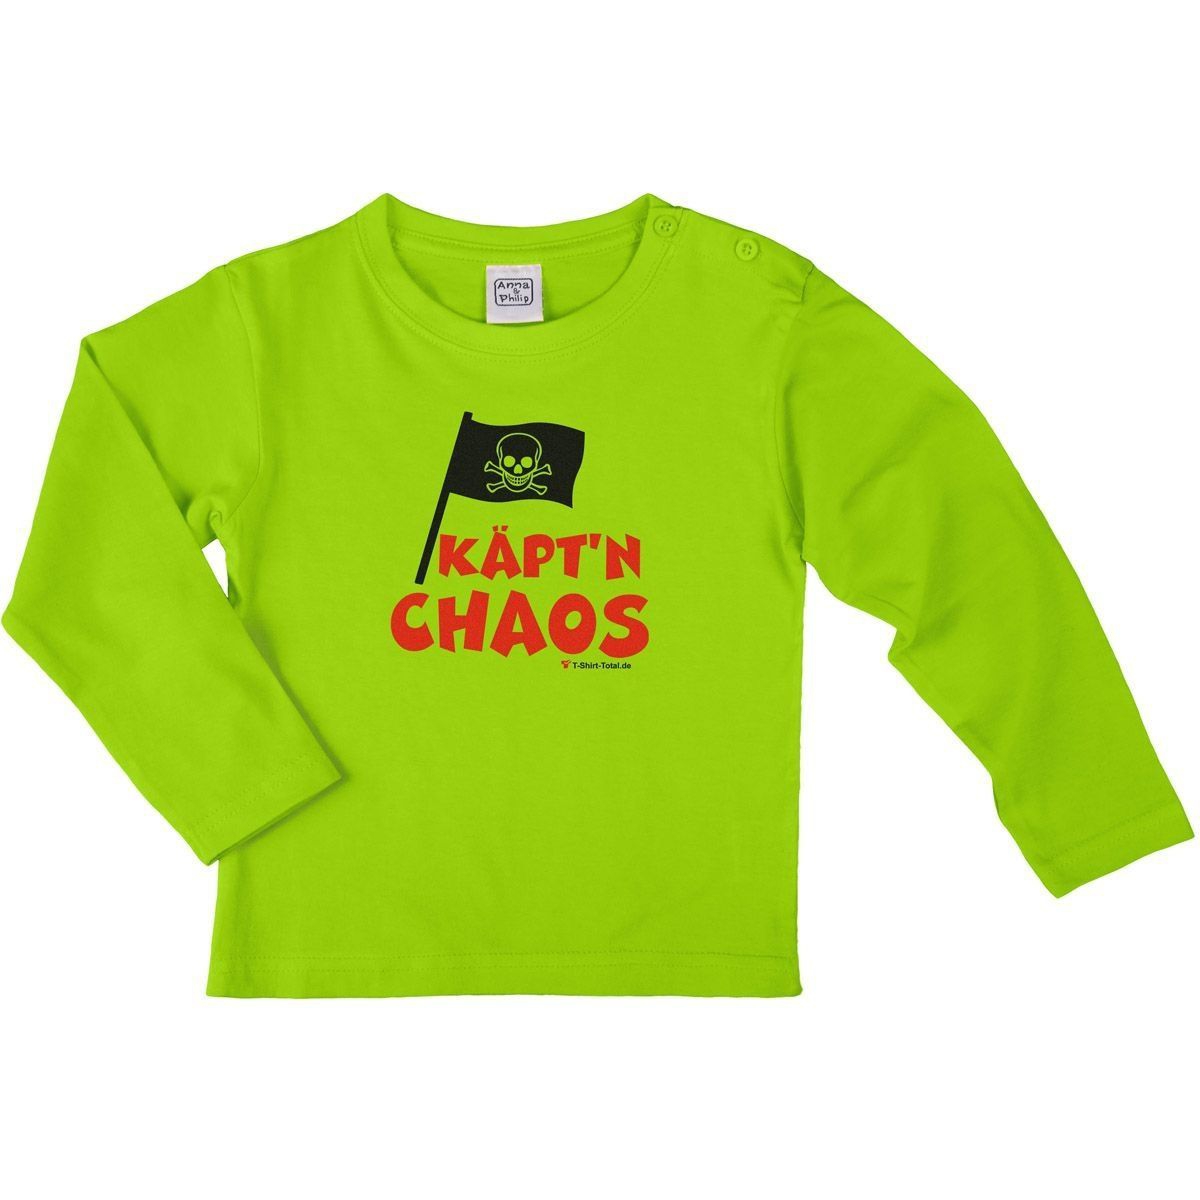 Käptn Chaos Kinder Langarm Shirt hellgrün 134 / 140